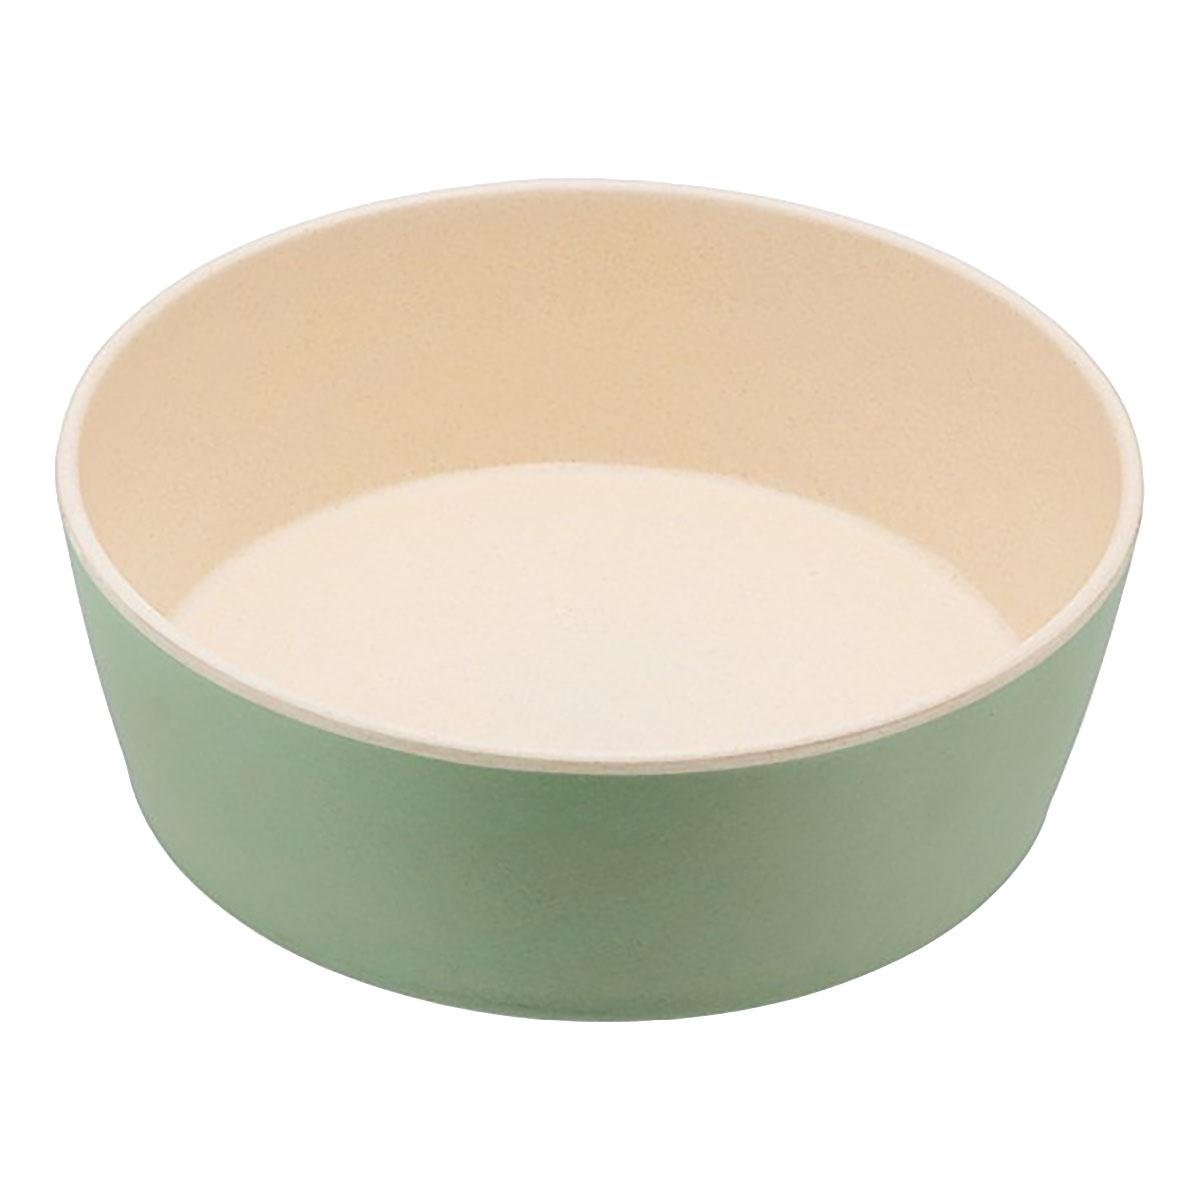 BECO Classic Bamboo Dog Bowl - Mint